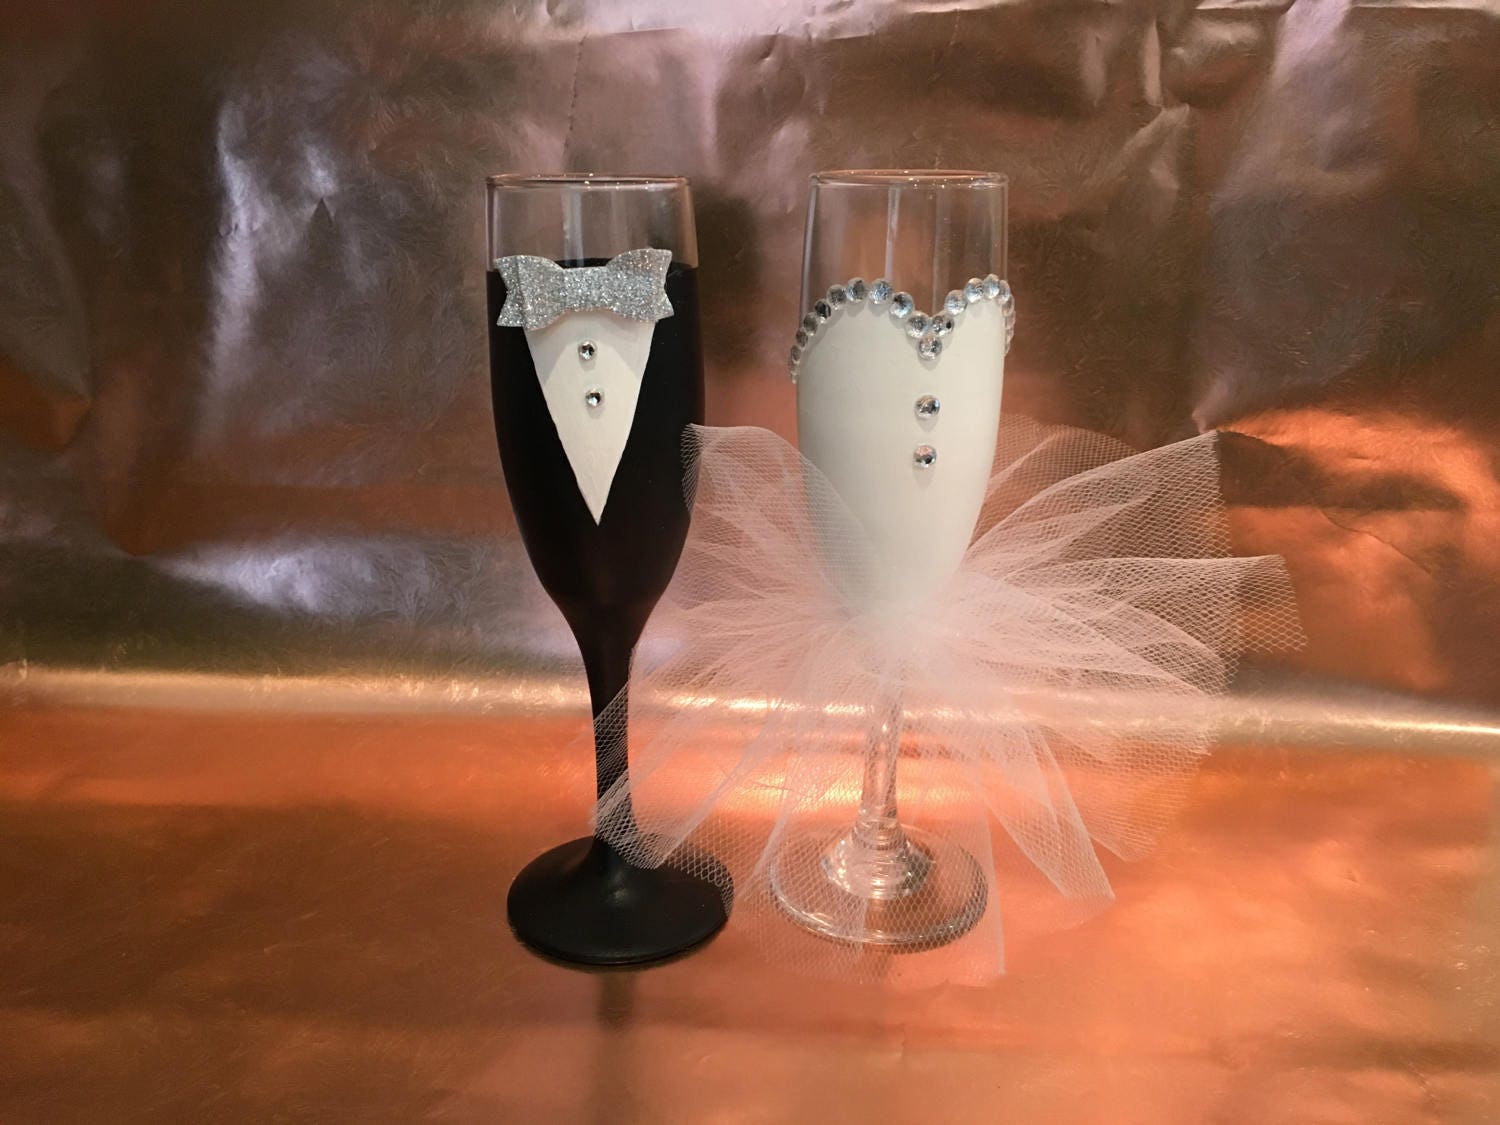 Bride & Groom Champagne Glass Set - Design: HH6